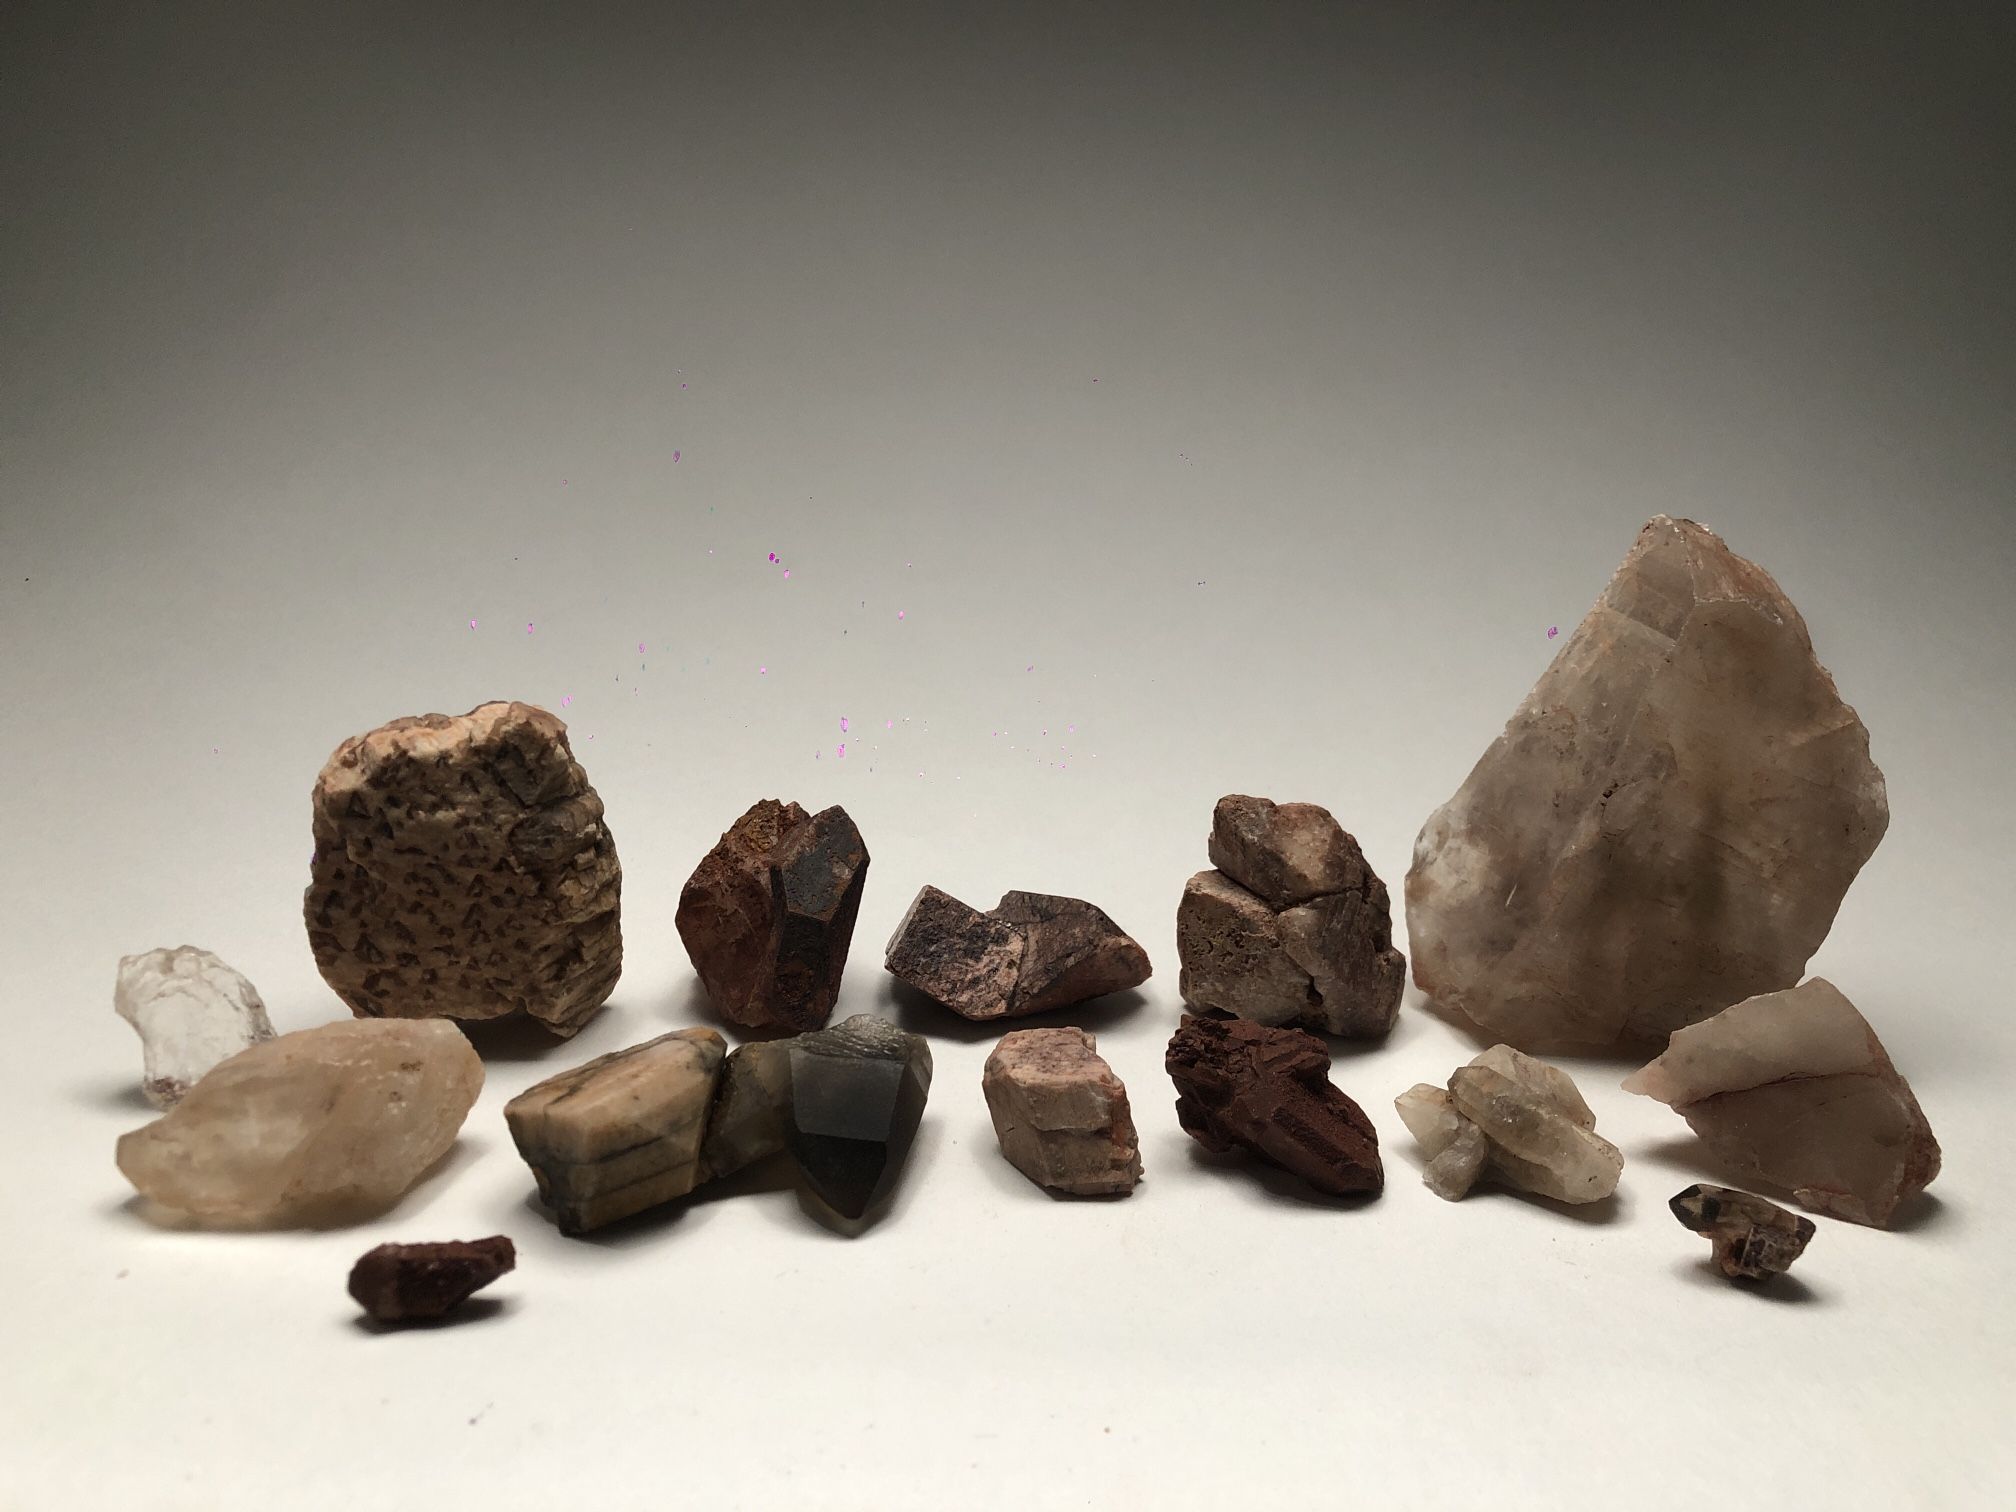 High Alpine Quartz Crystal and Cluster Collection with Feldspar